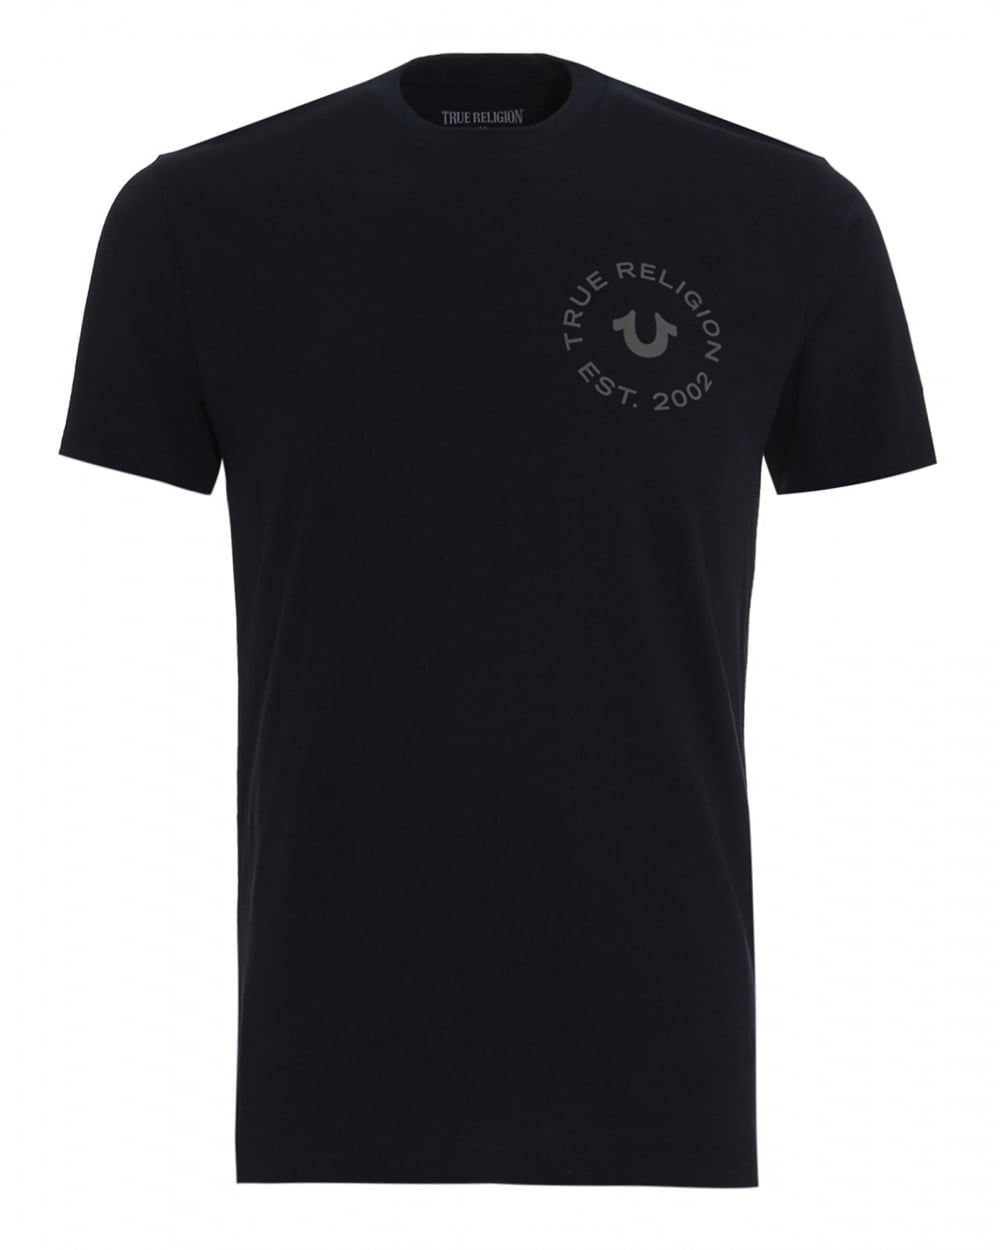 Black and White with Blue Circle Logo - True Religion Mens T Shirt, Navy Blue Circle Logo Tee